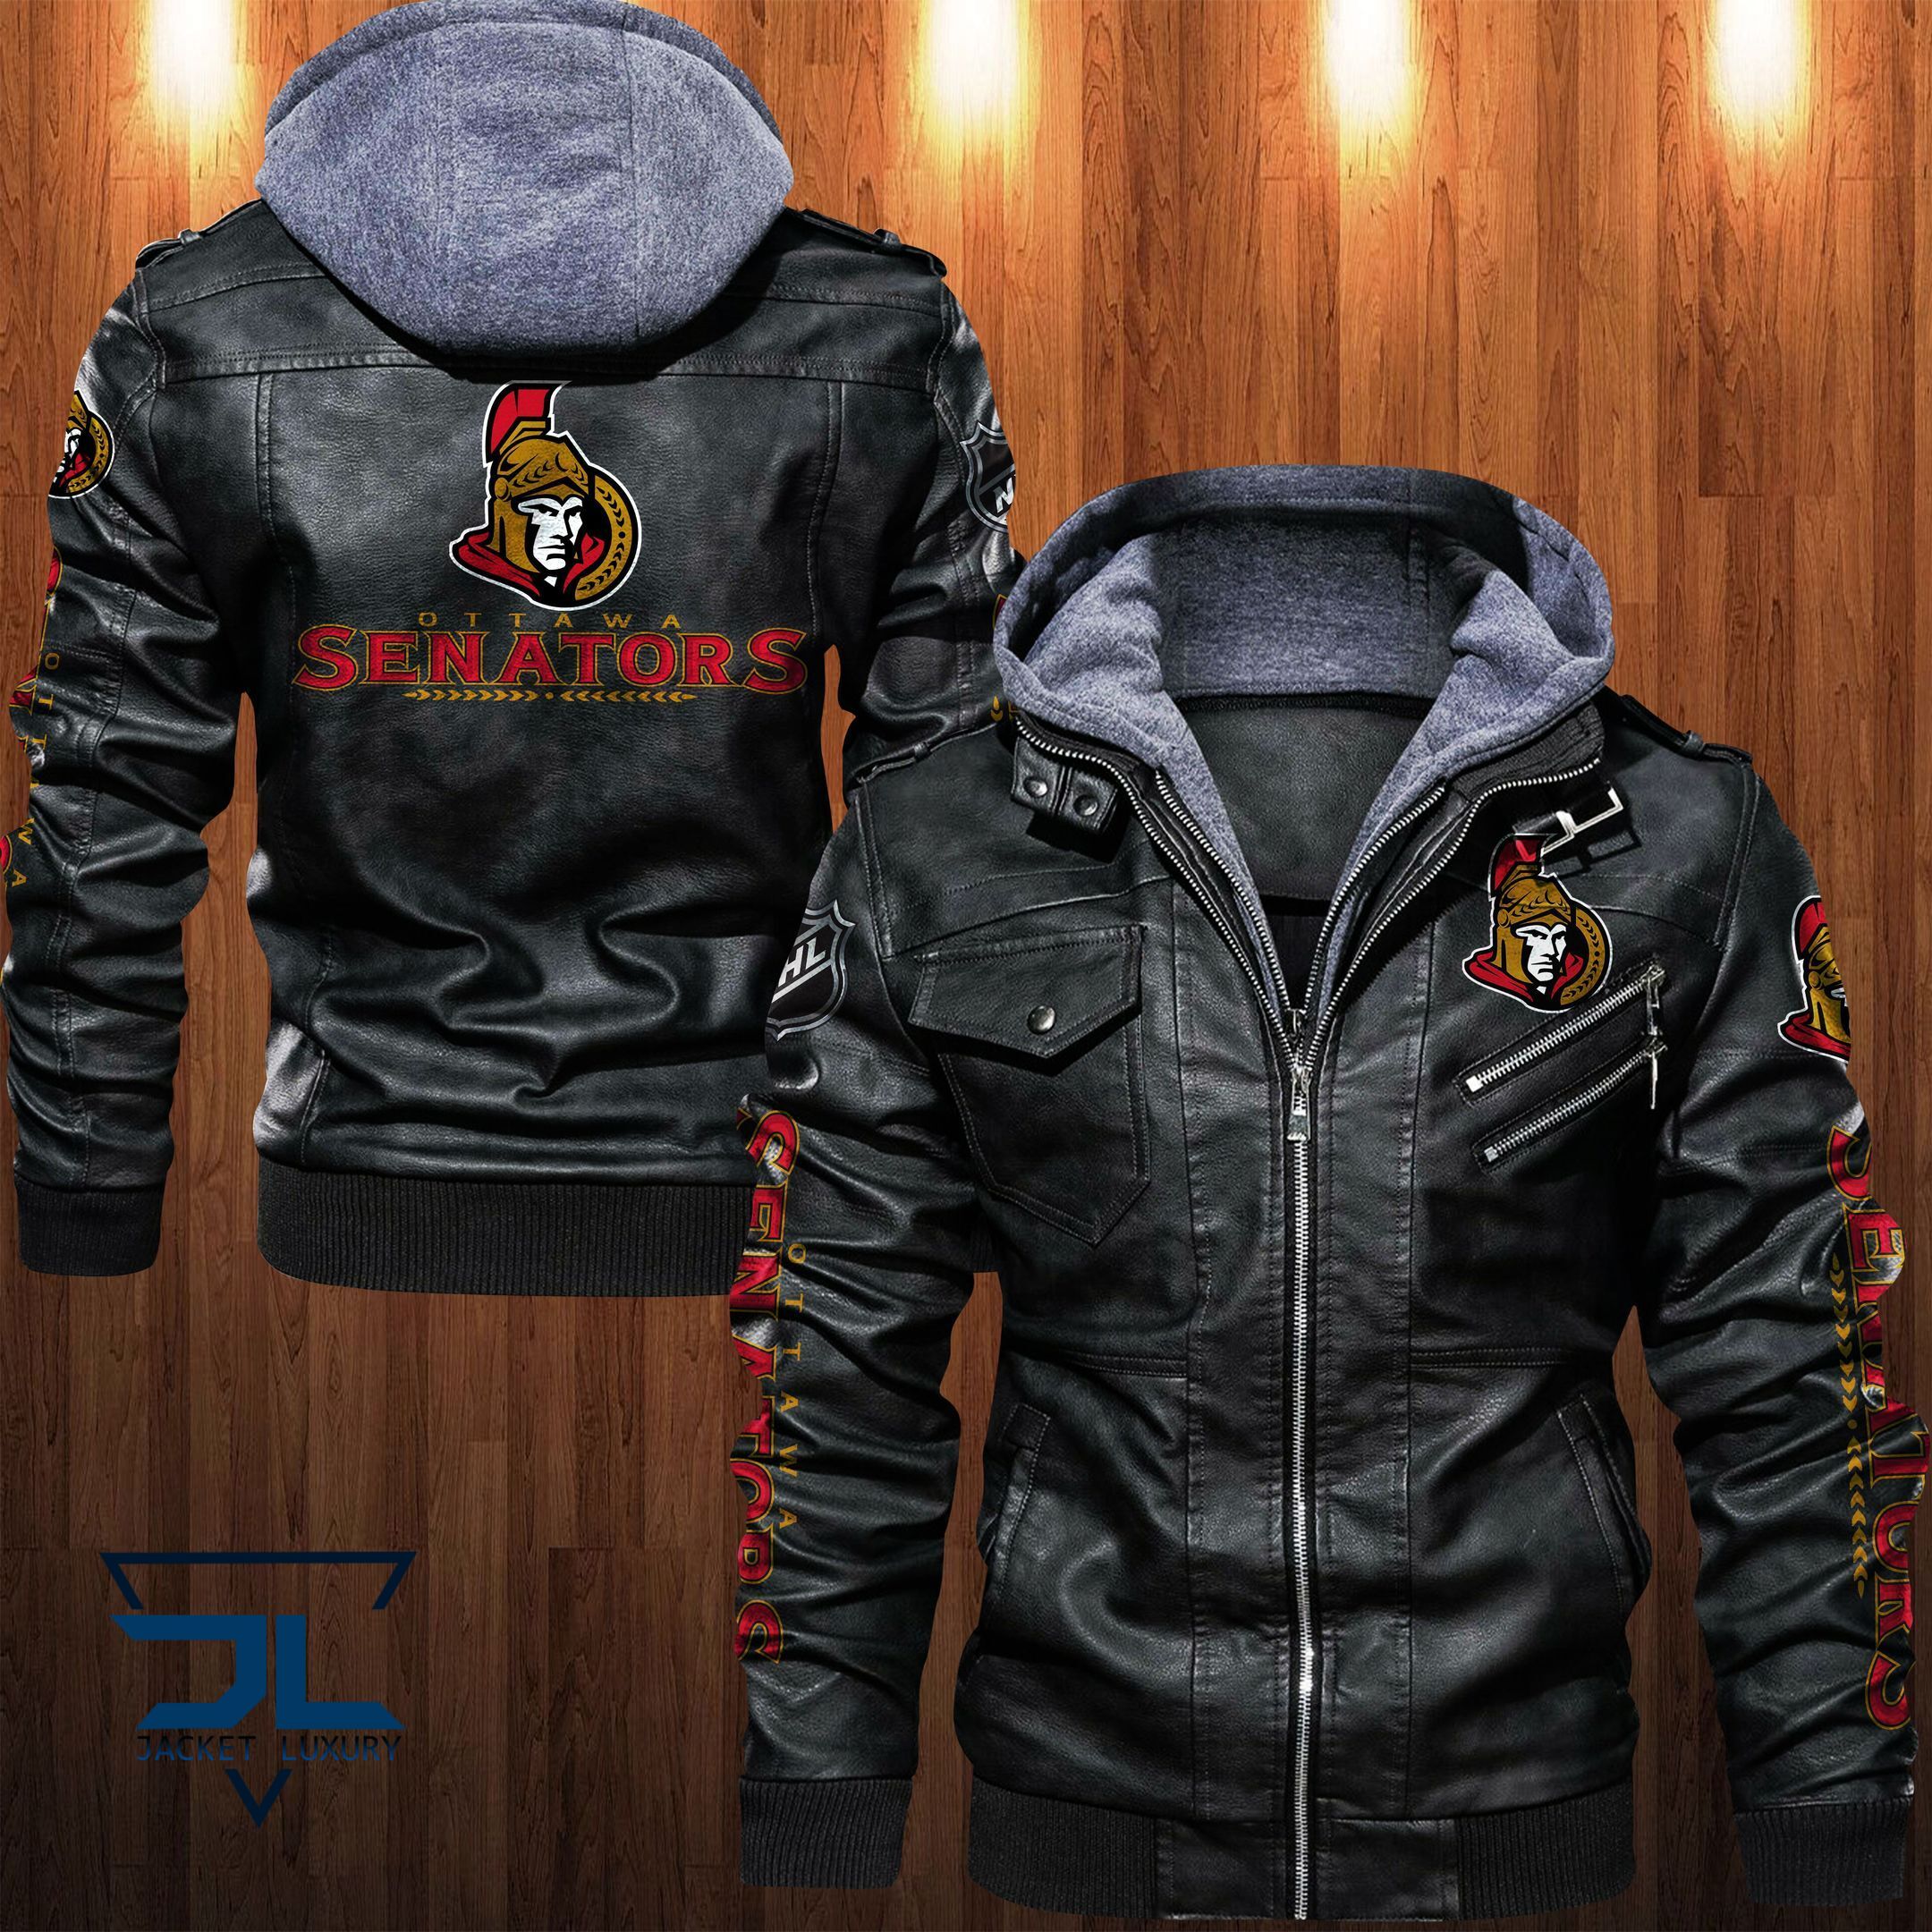 What Leather jacket Sells Best on Techcomshop? 178